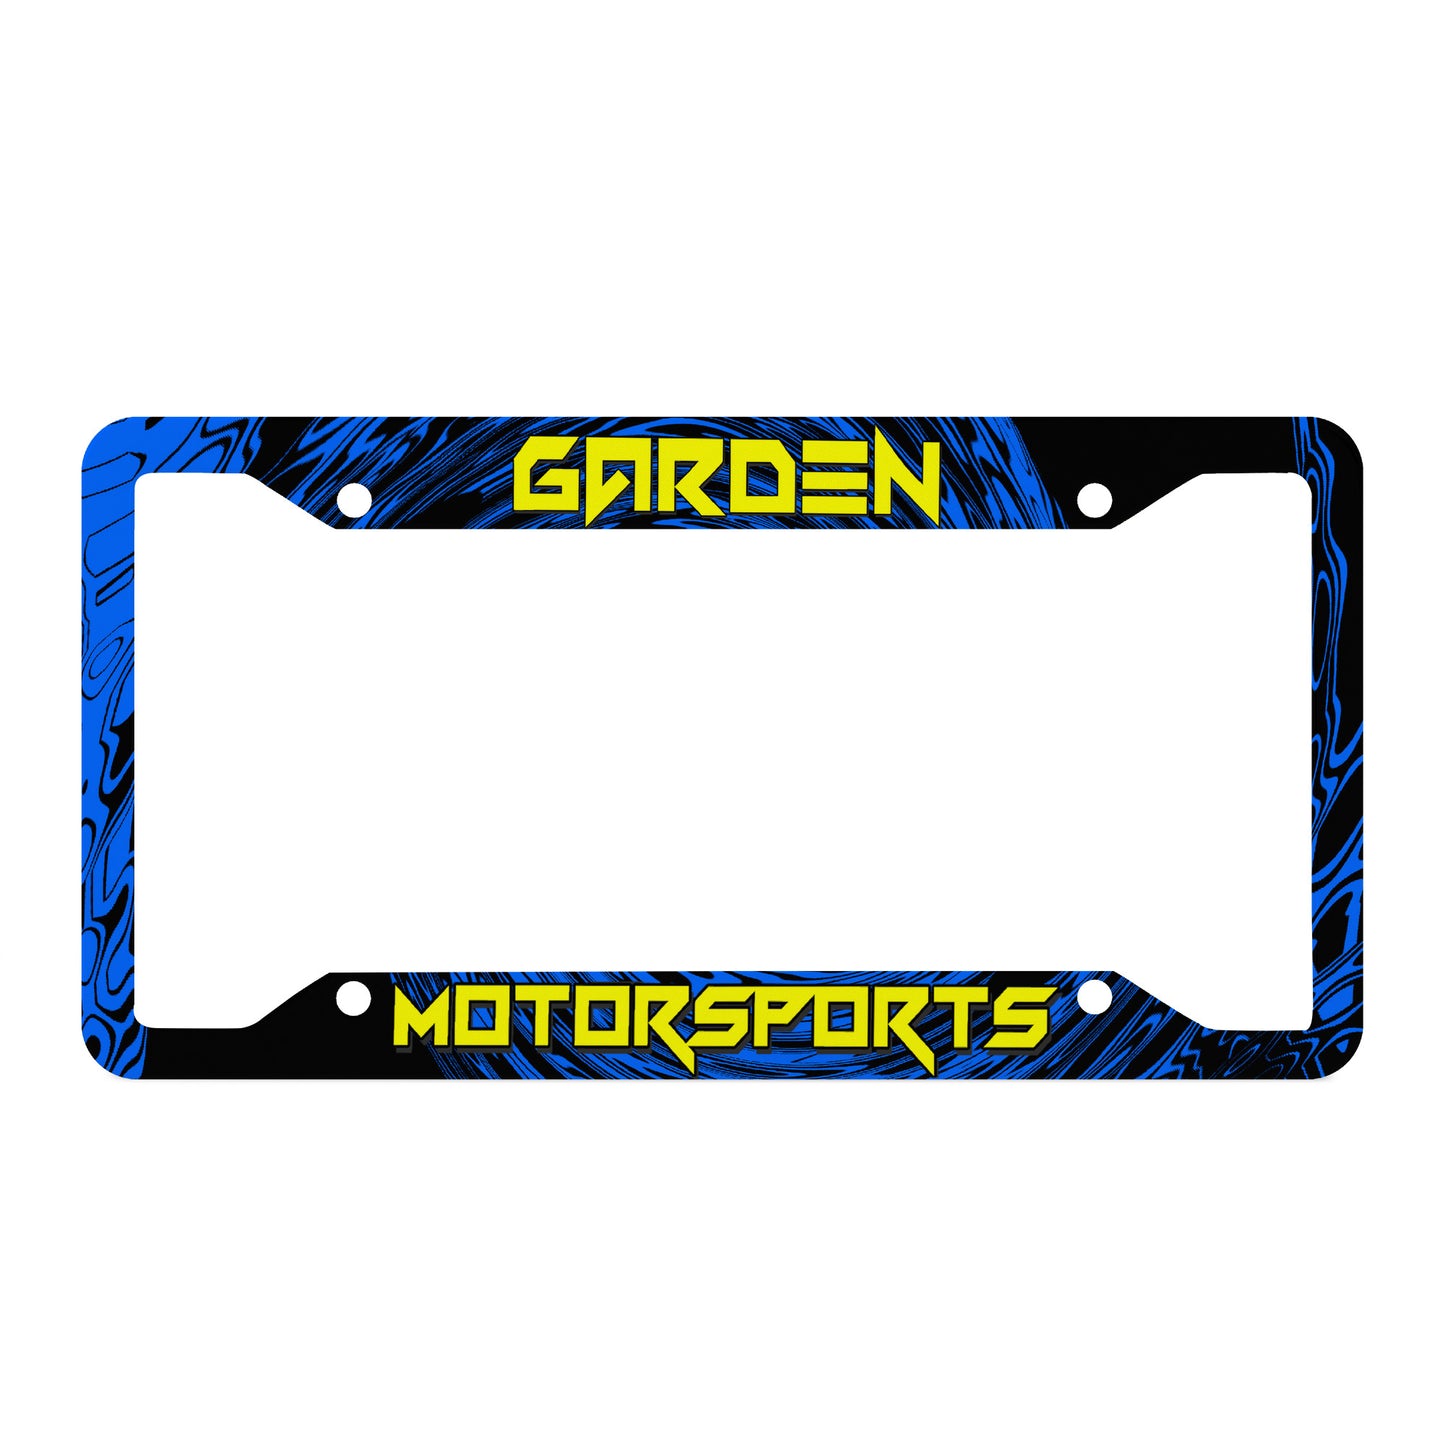 Garden Motorsports License Plate Frames